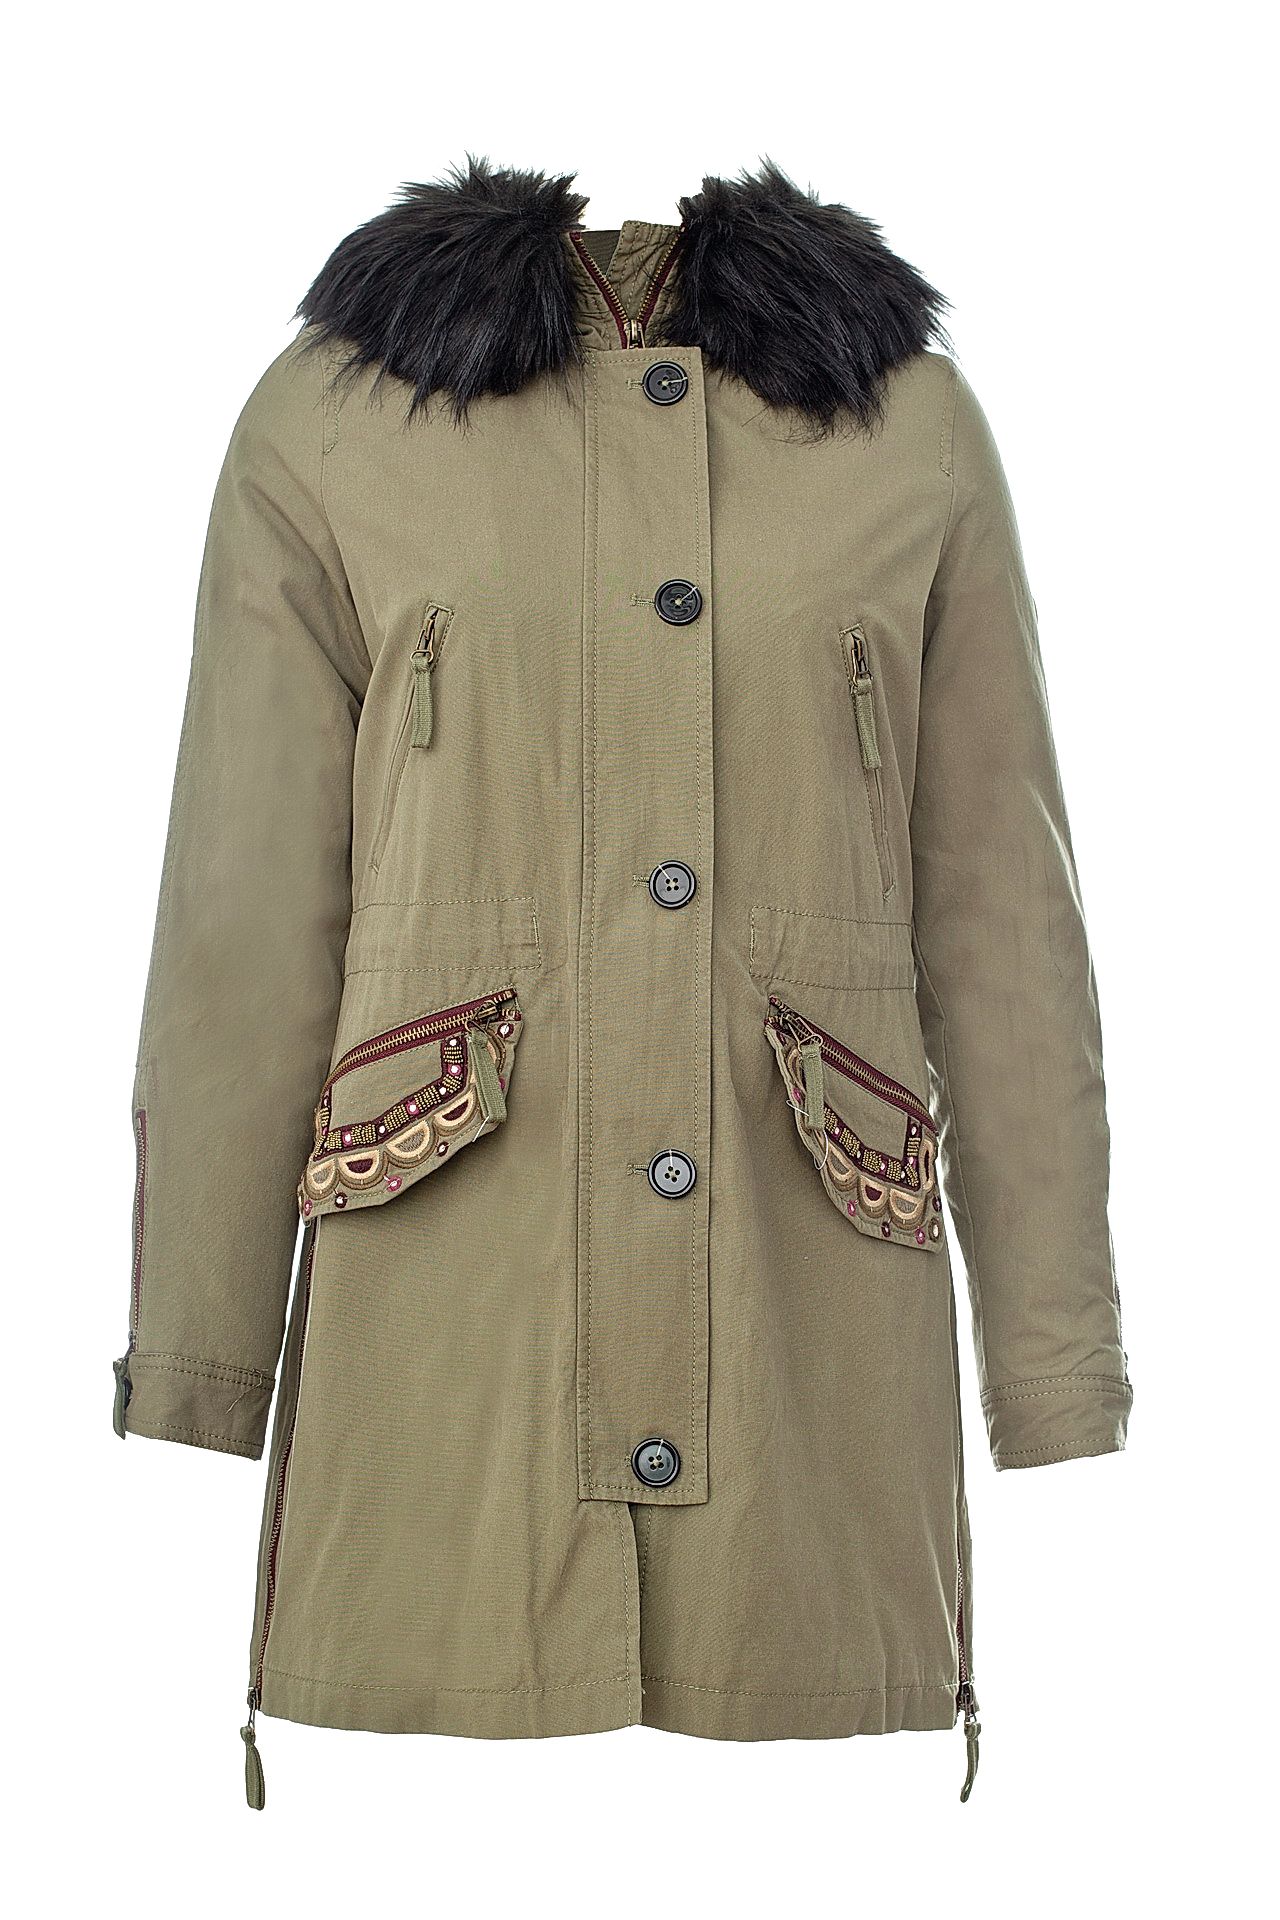 Одежда женская Куртка BLONDE No8 (GSTAADNEWBLING316/17.1). Купить за 15750 руб.